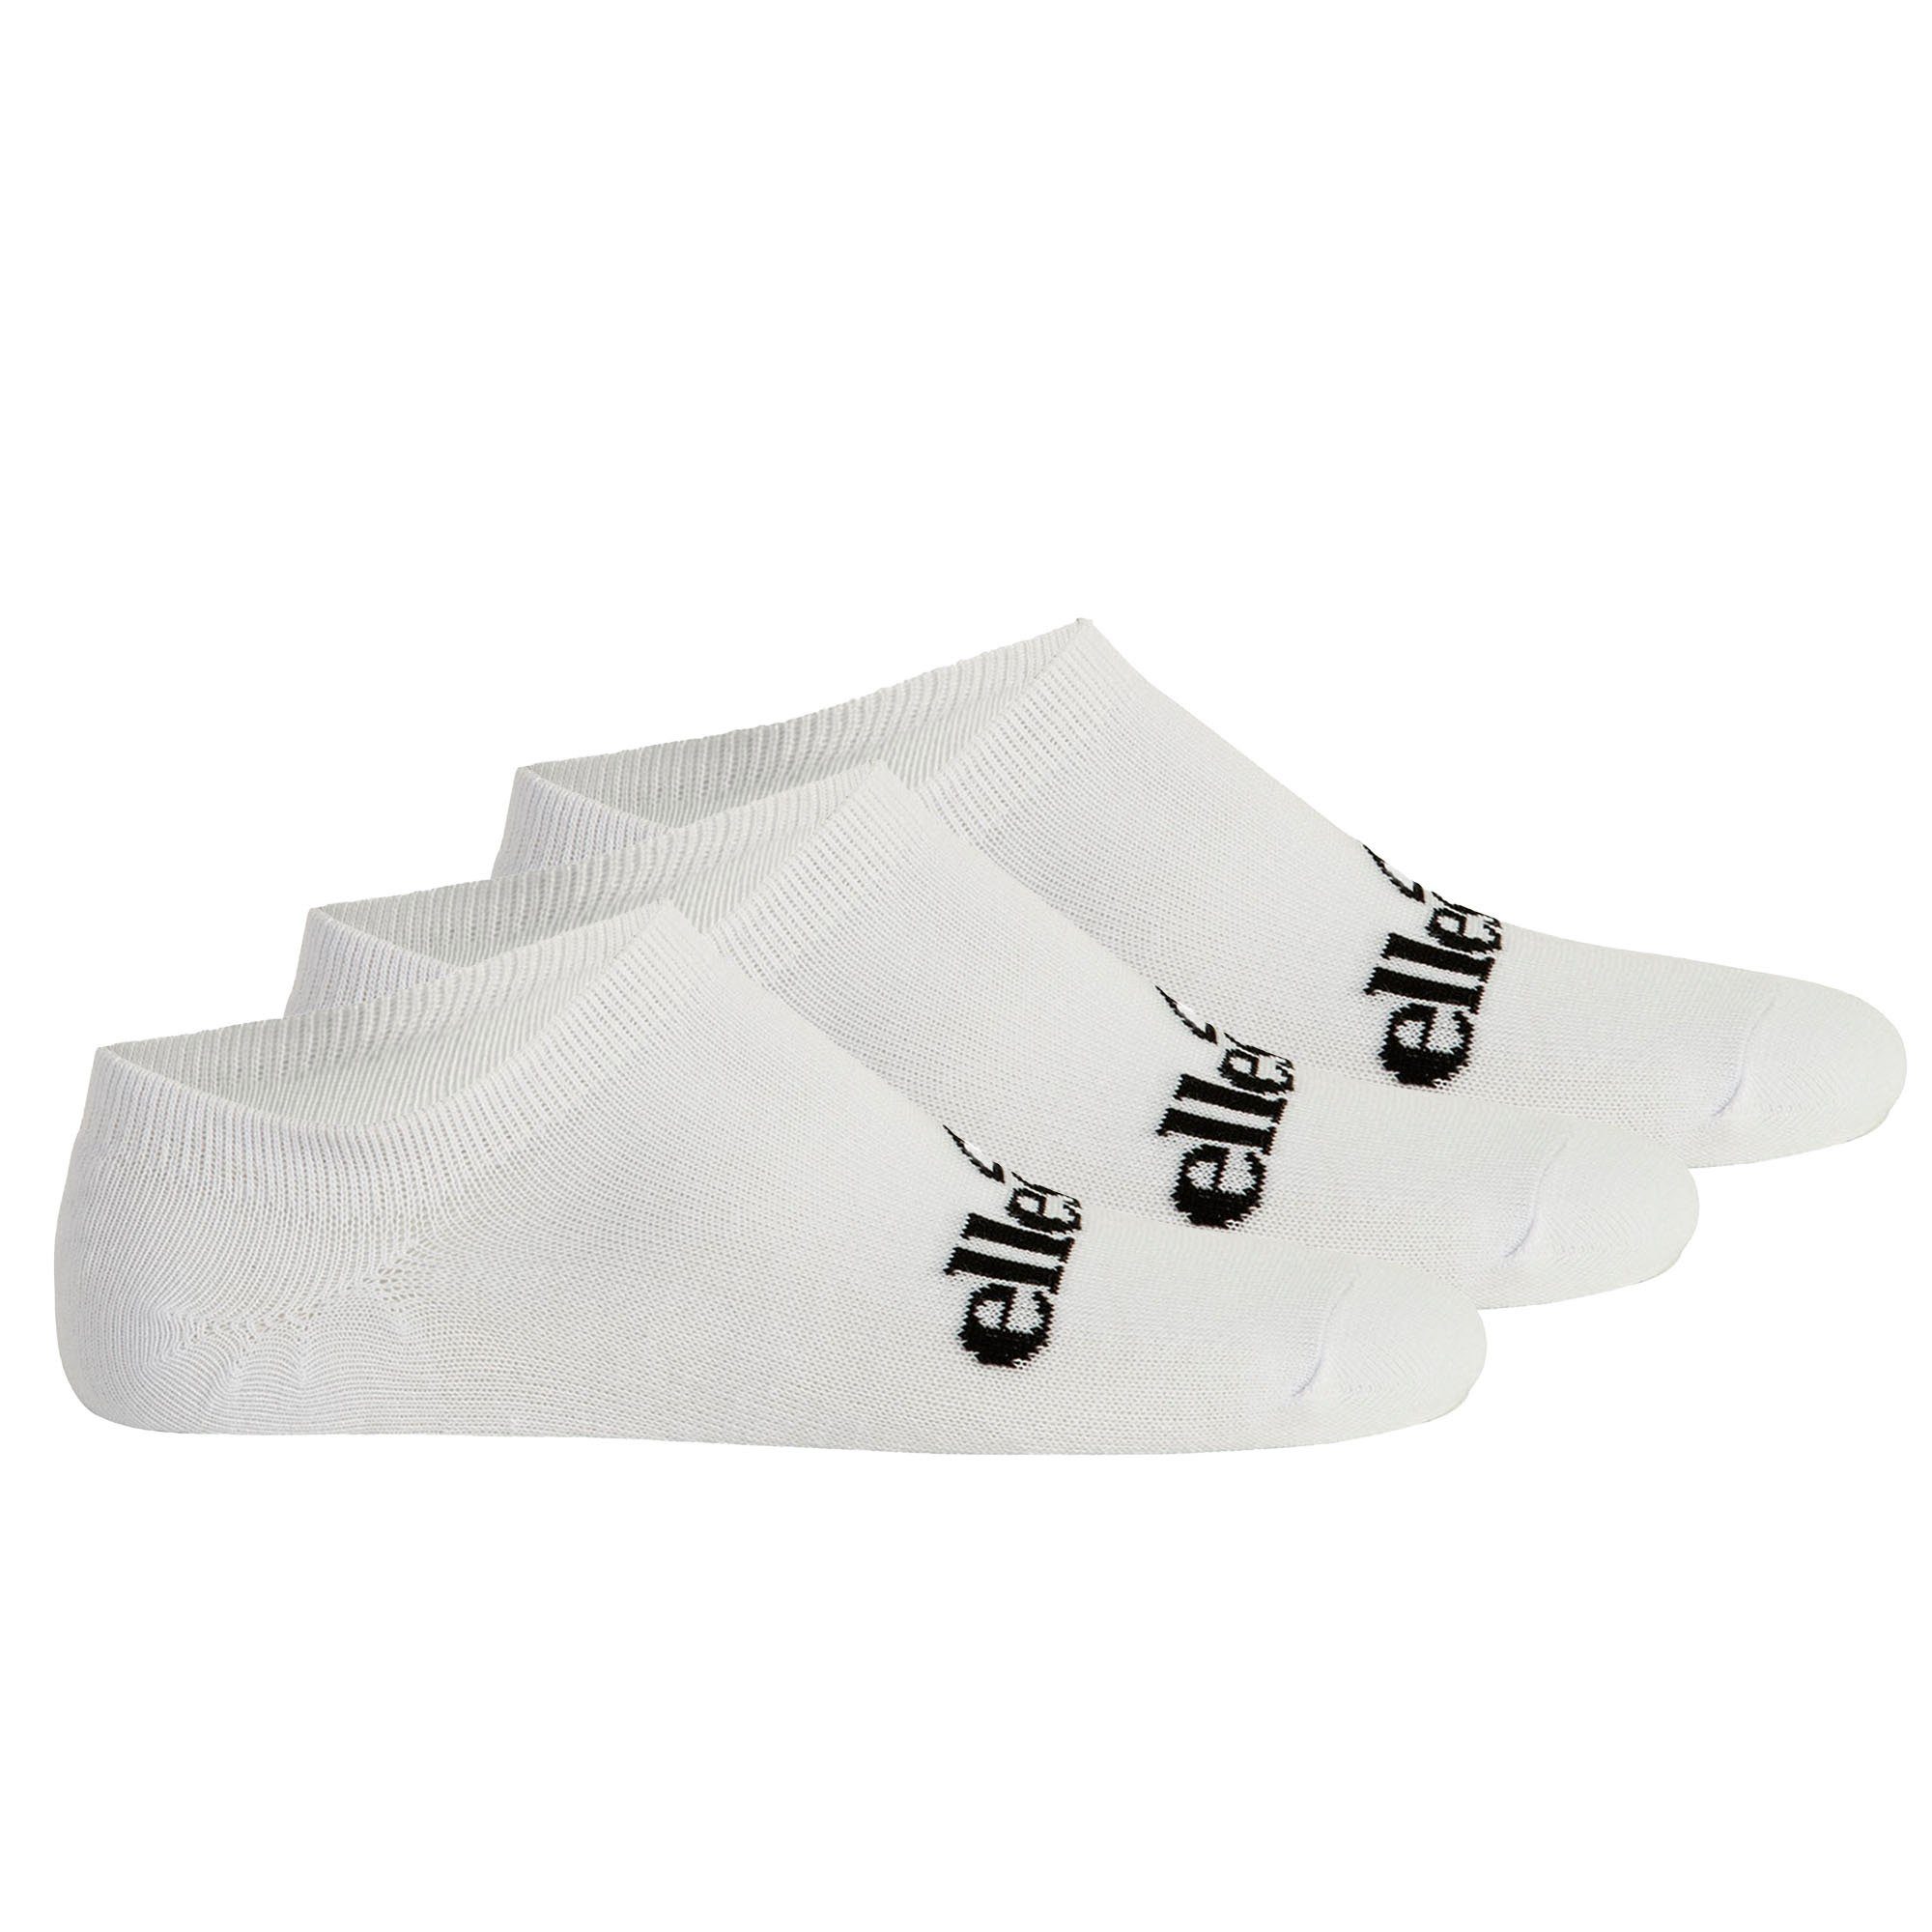 Neue Ware Ellesse Sportsocken - Unisex No FRIMO, Show Socken Sneaker Weiß 3 Paar